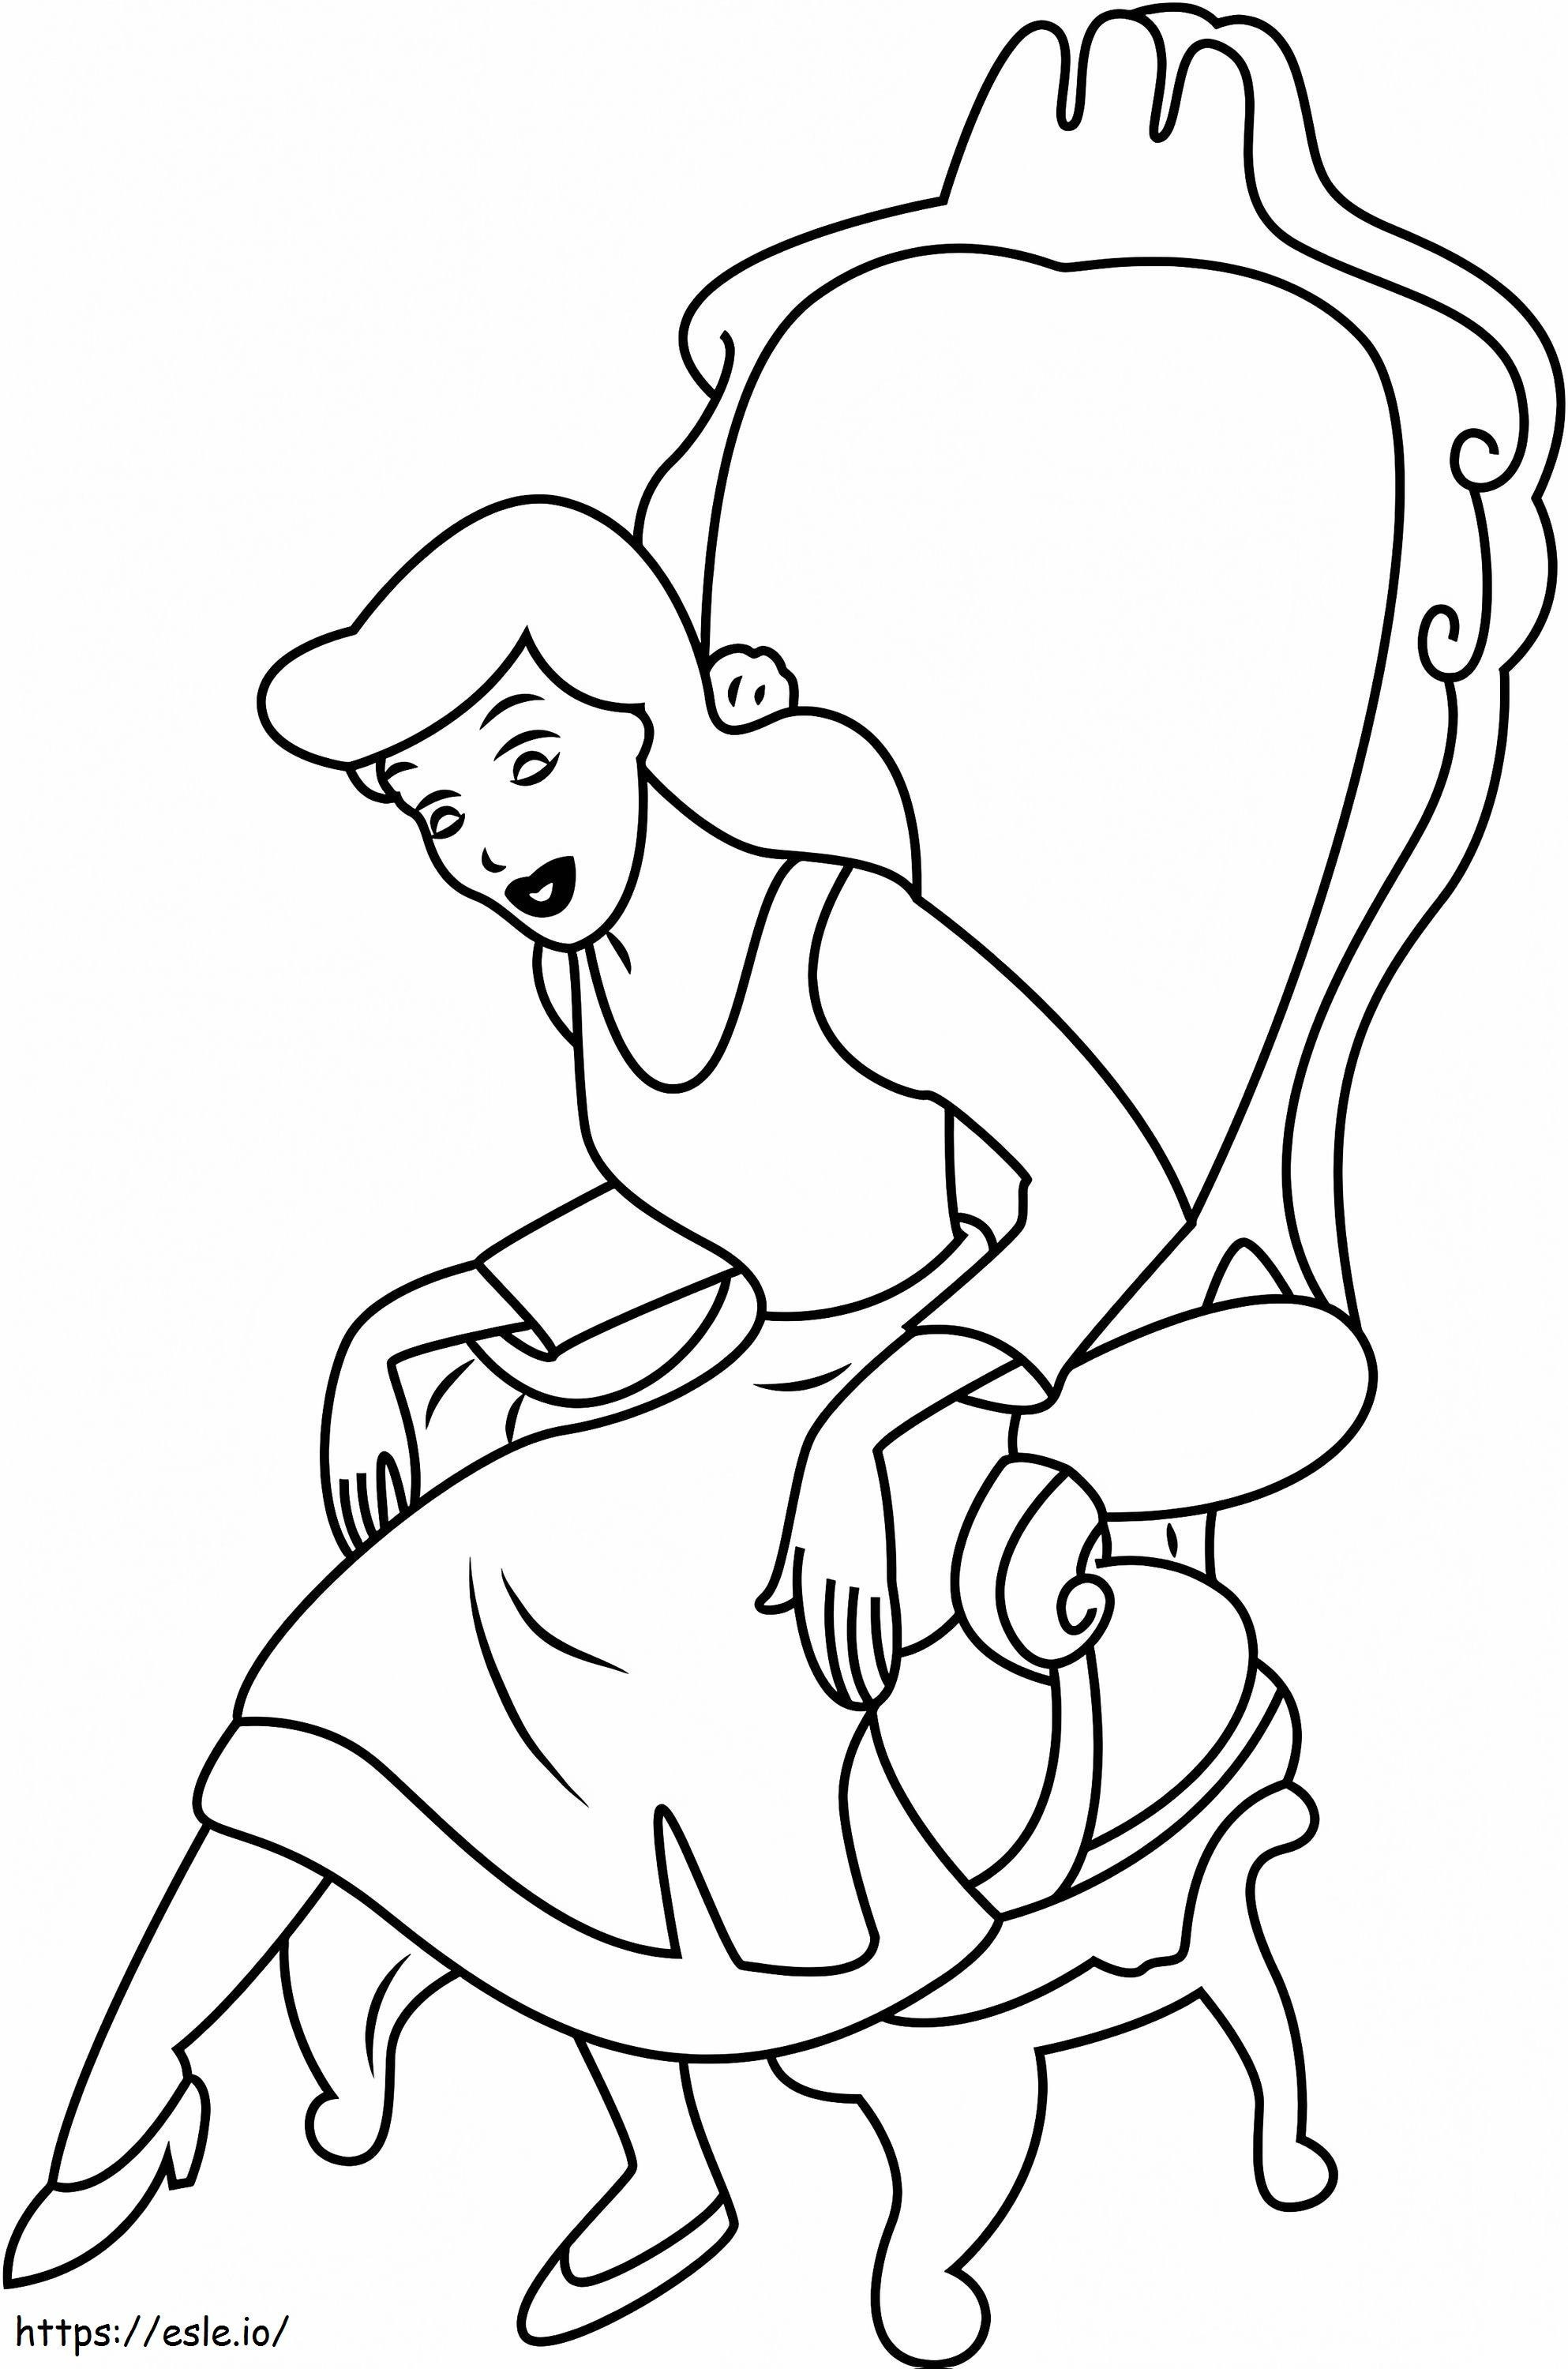 1532573917 Cinderella Sitting A4 coloring page